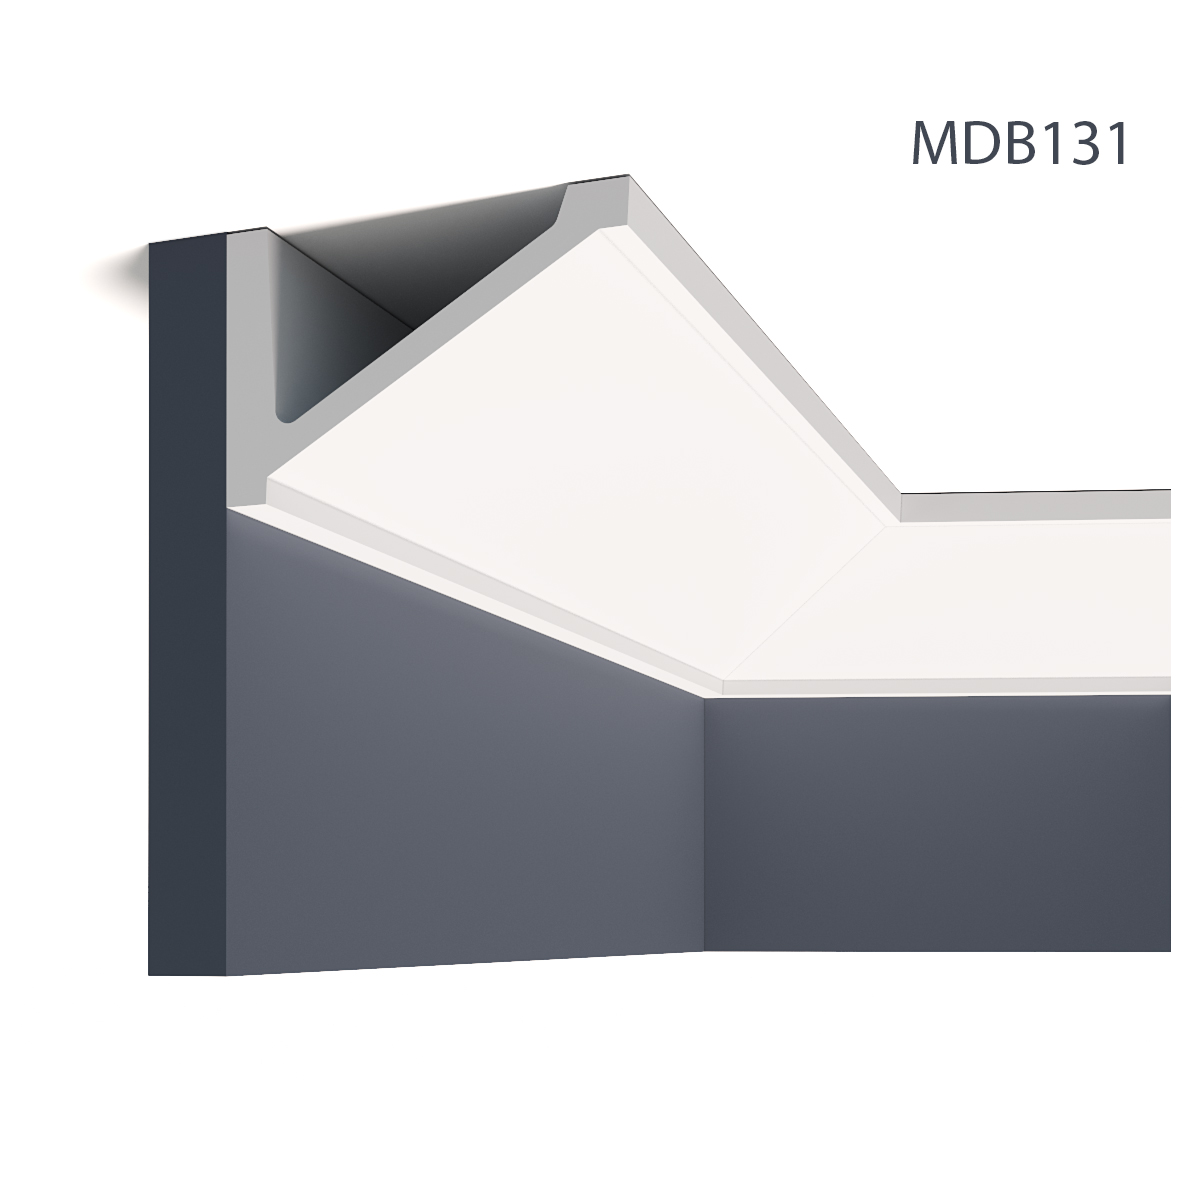 Cornișe tavan Mardom Decor MRD-MDB131, material: ProFoam